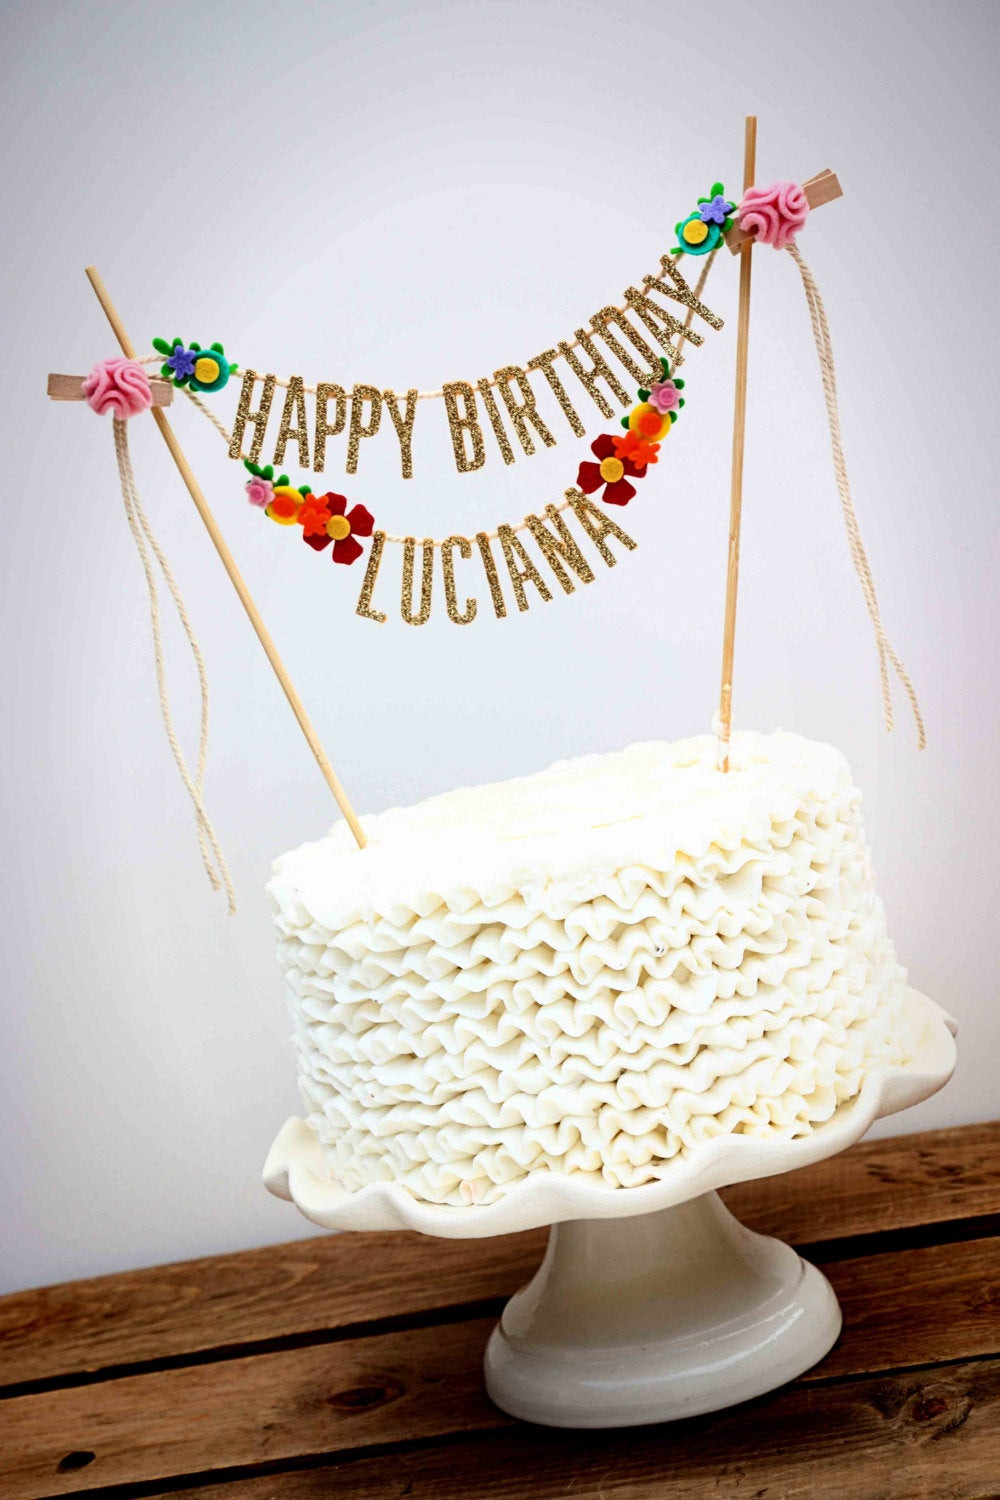 Best ideas about Happy Birthday Cake Banner
. Save or Pin Glitter Gold Birthday Cake Banner Happy Birthday Cake Banner Now.